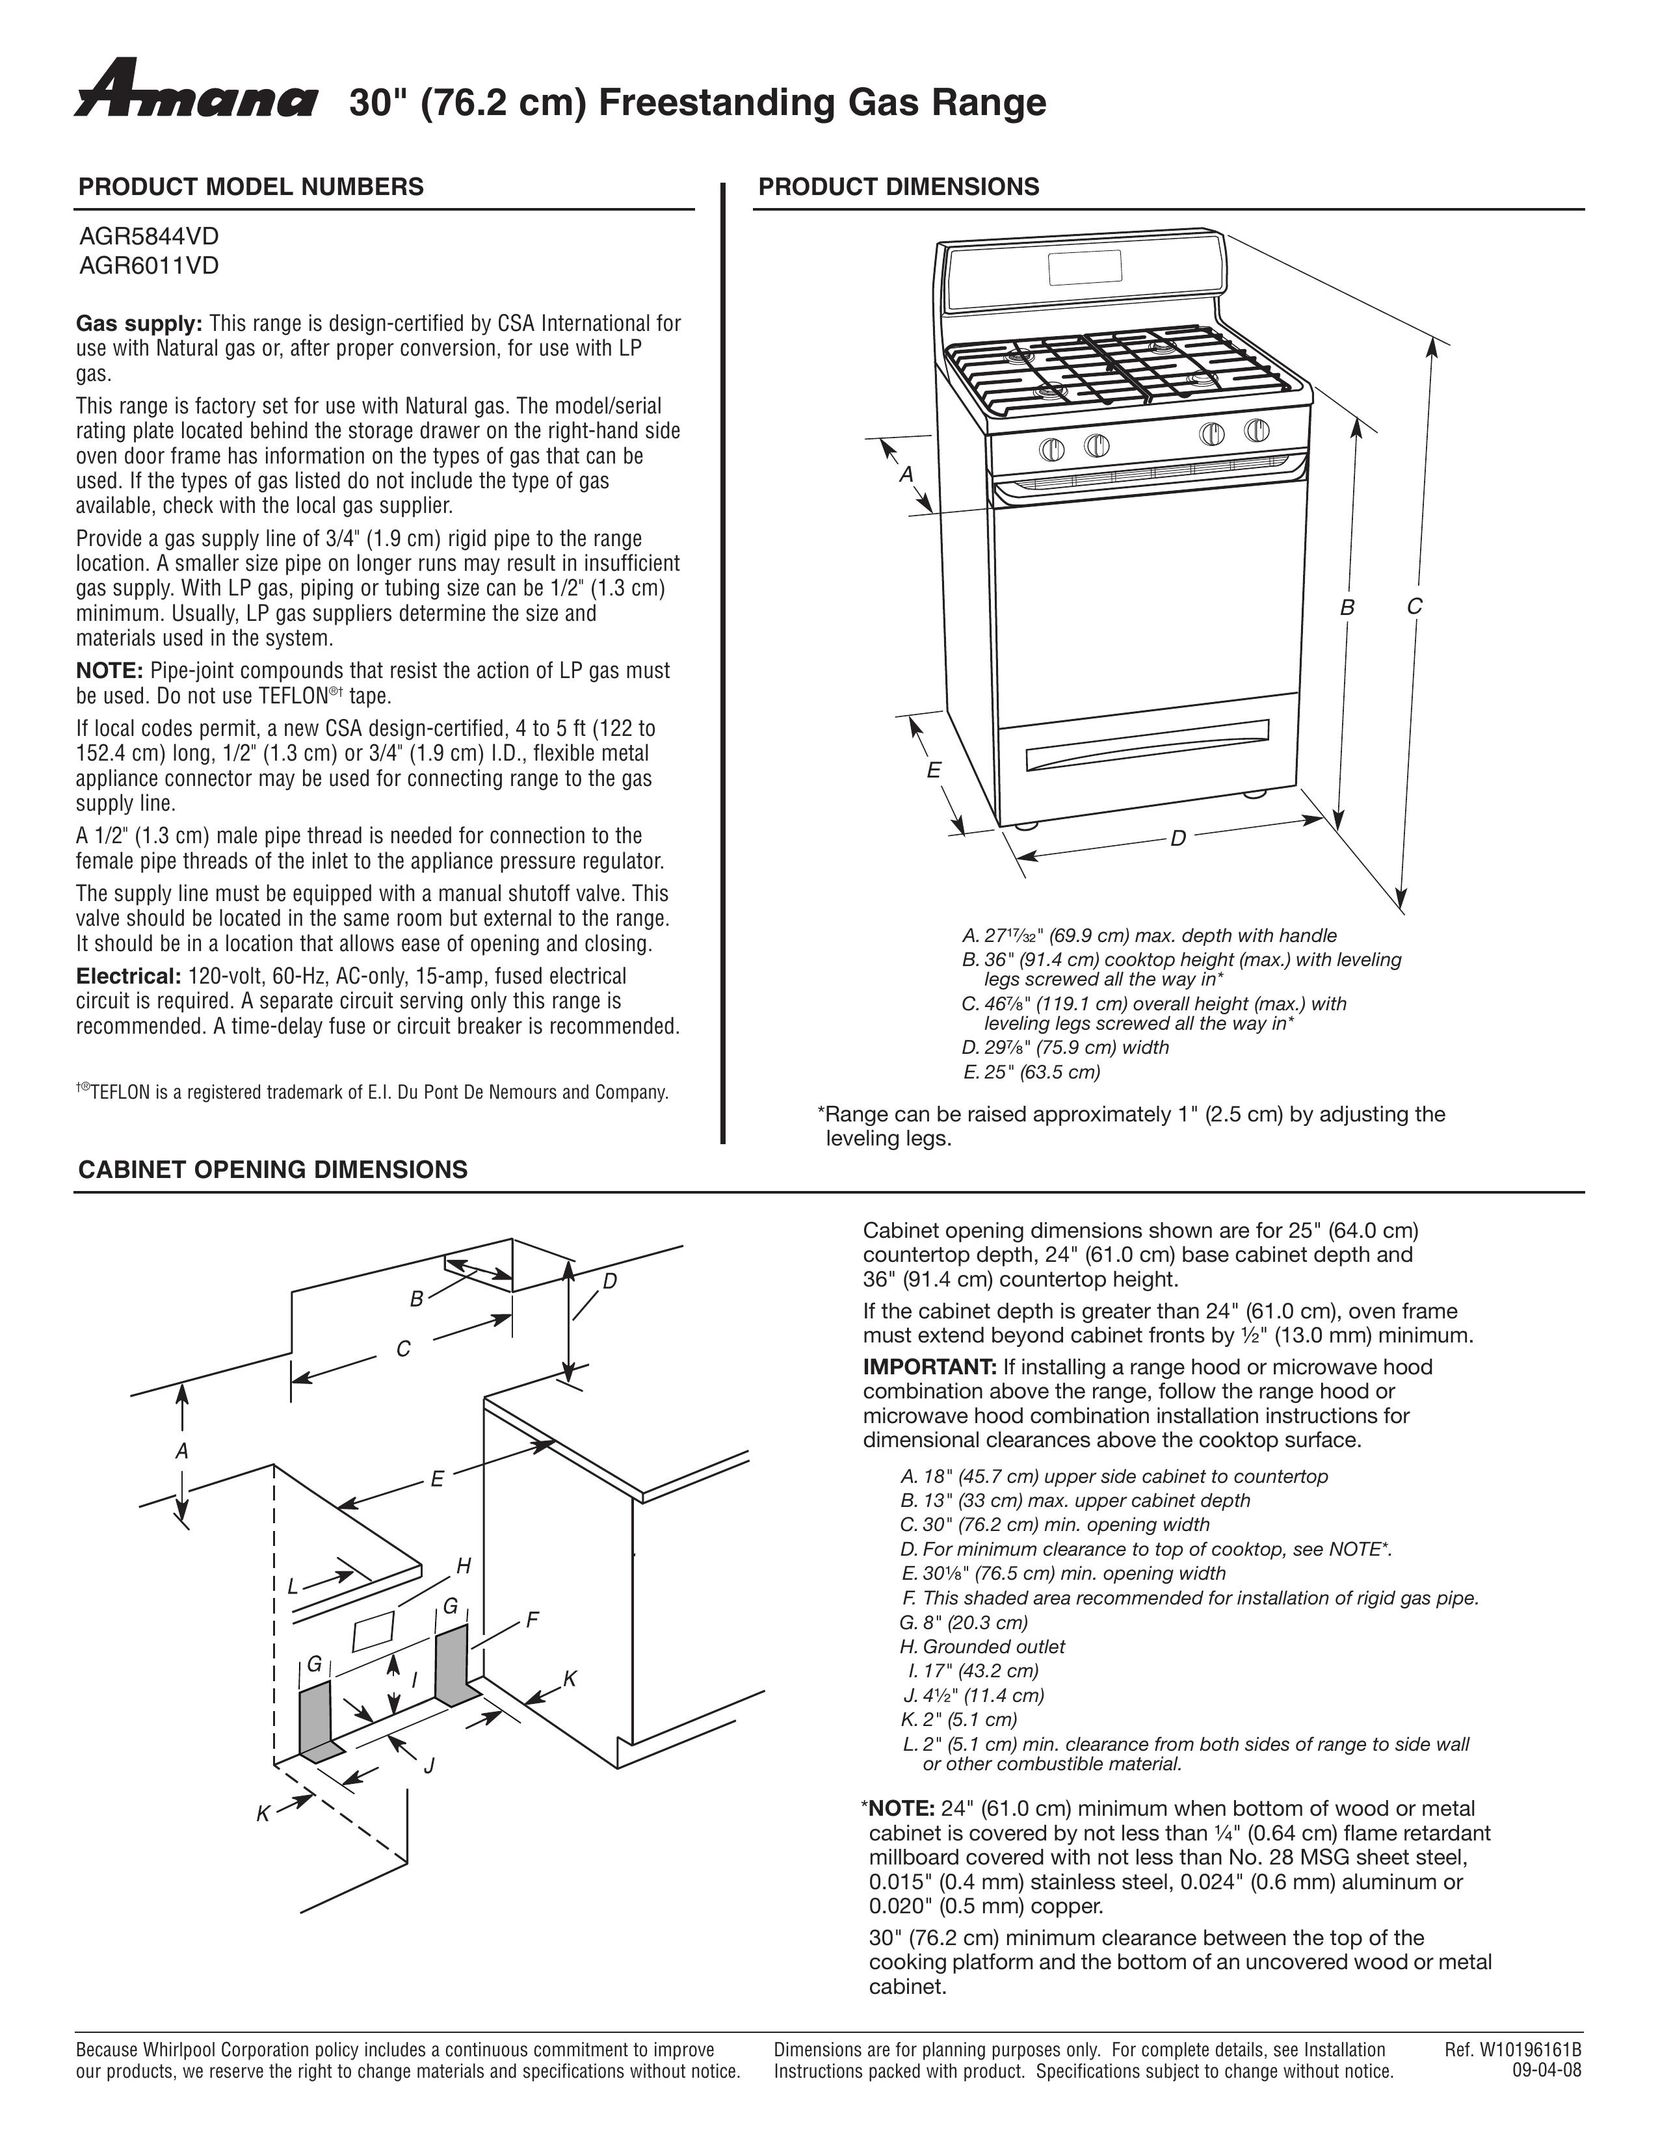 Amana AGR6011VD Range User Manual